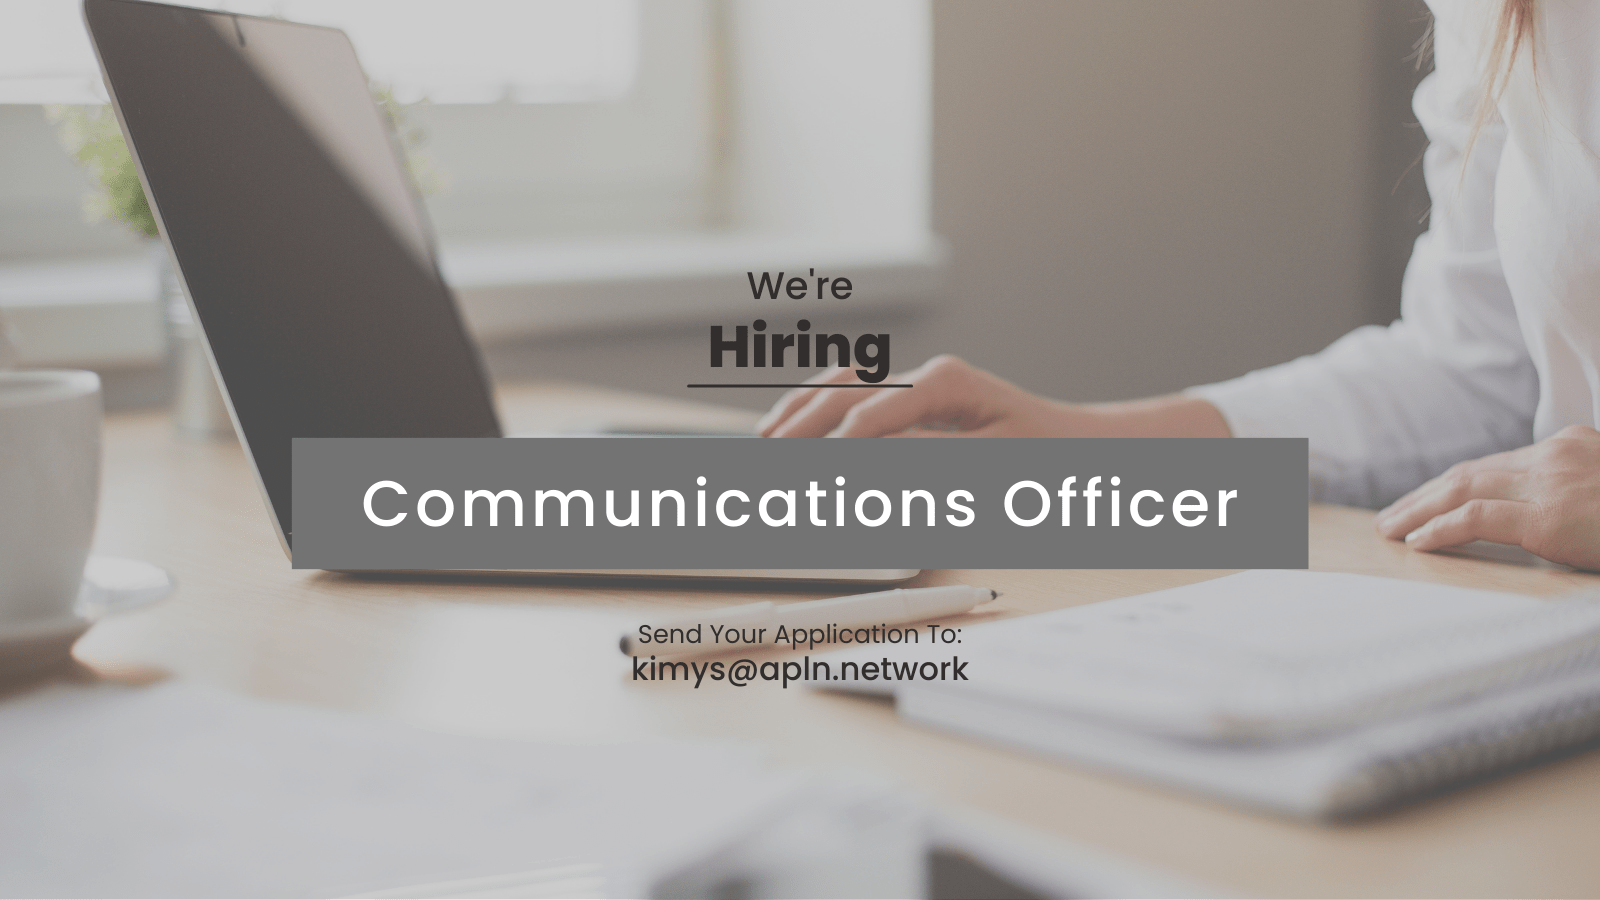 [CLOSED] Communications Officer - Job Advert